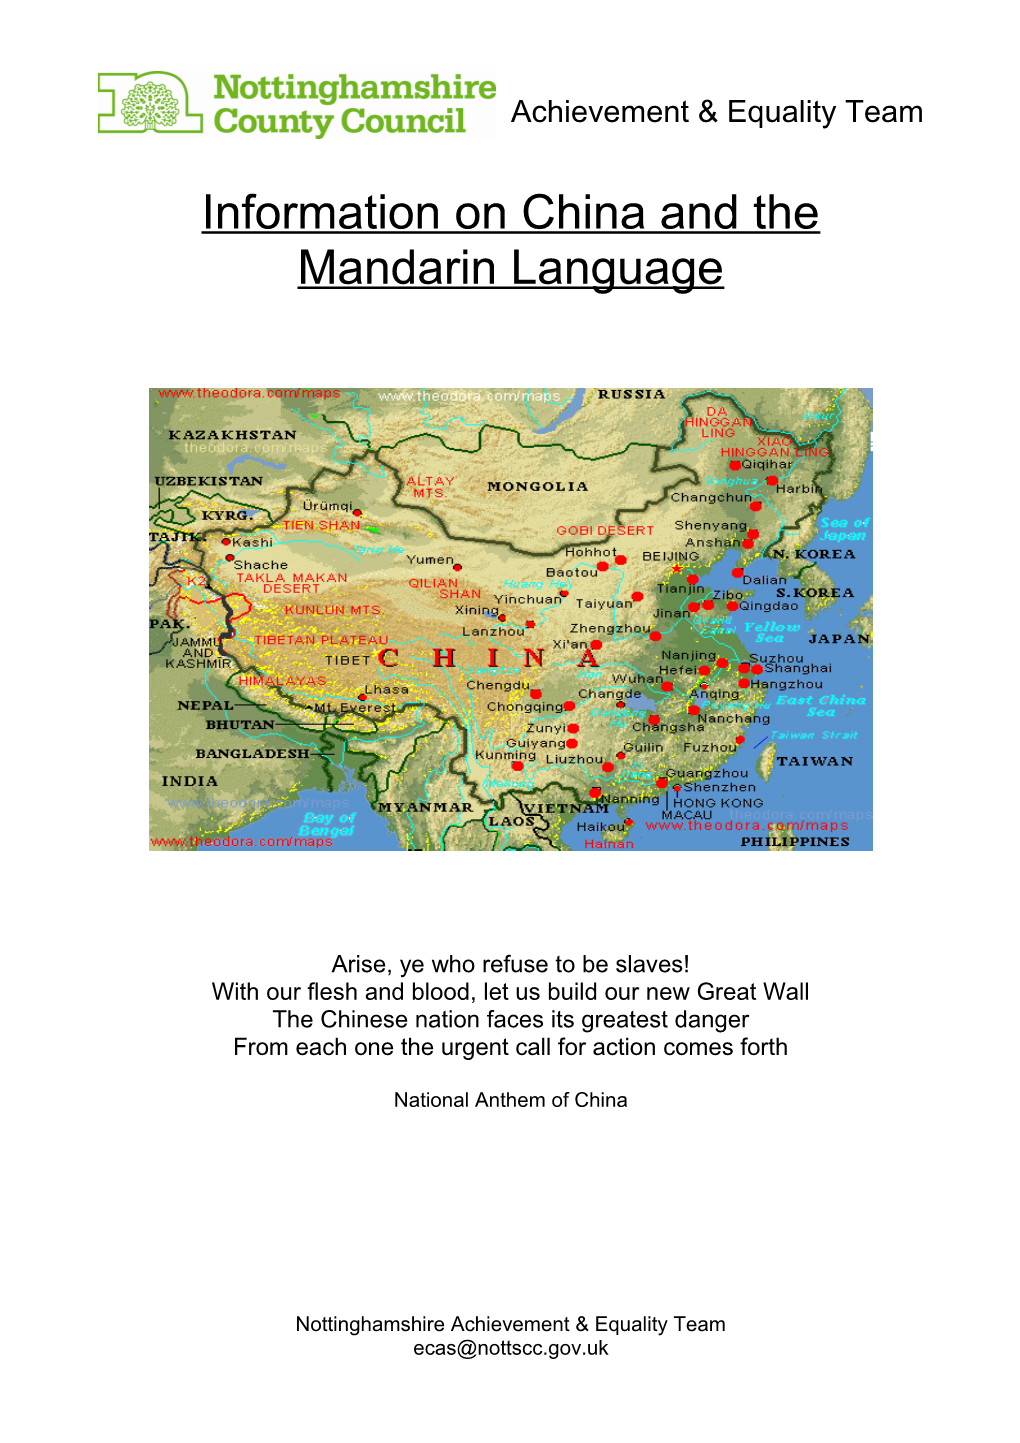 Information on China and the Mandarin Language